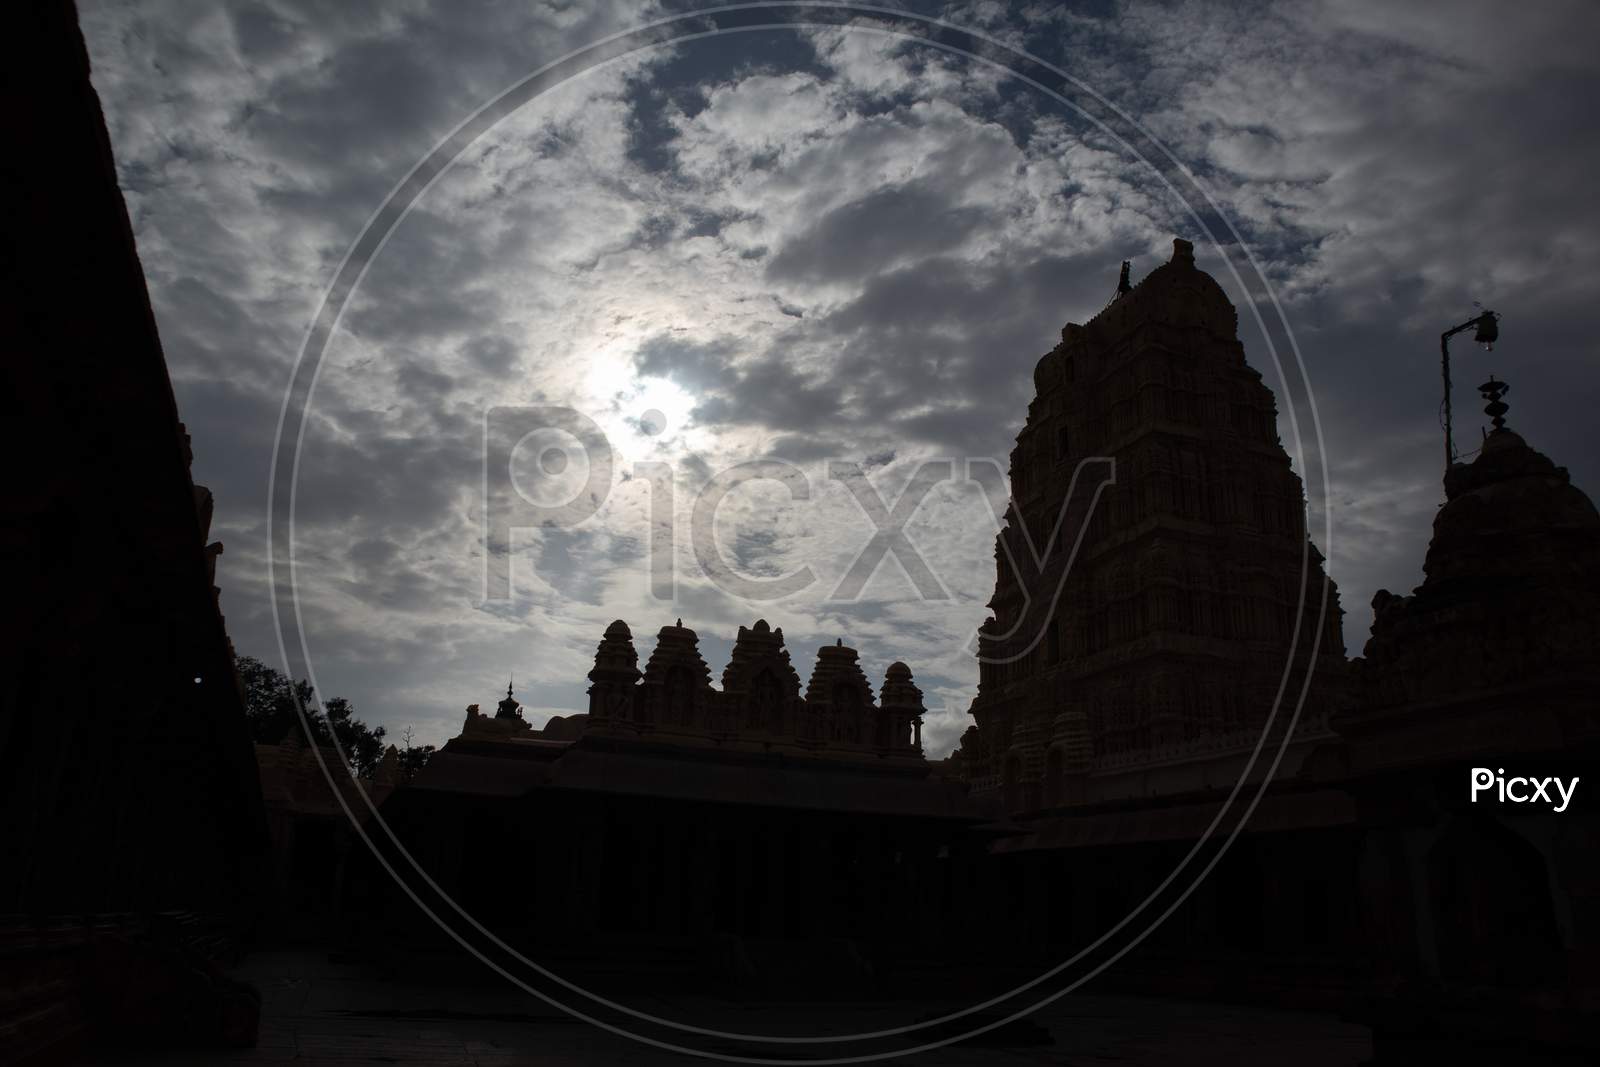 silhouette of a Temple Gopuram